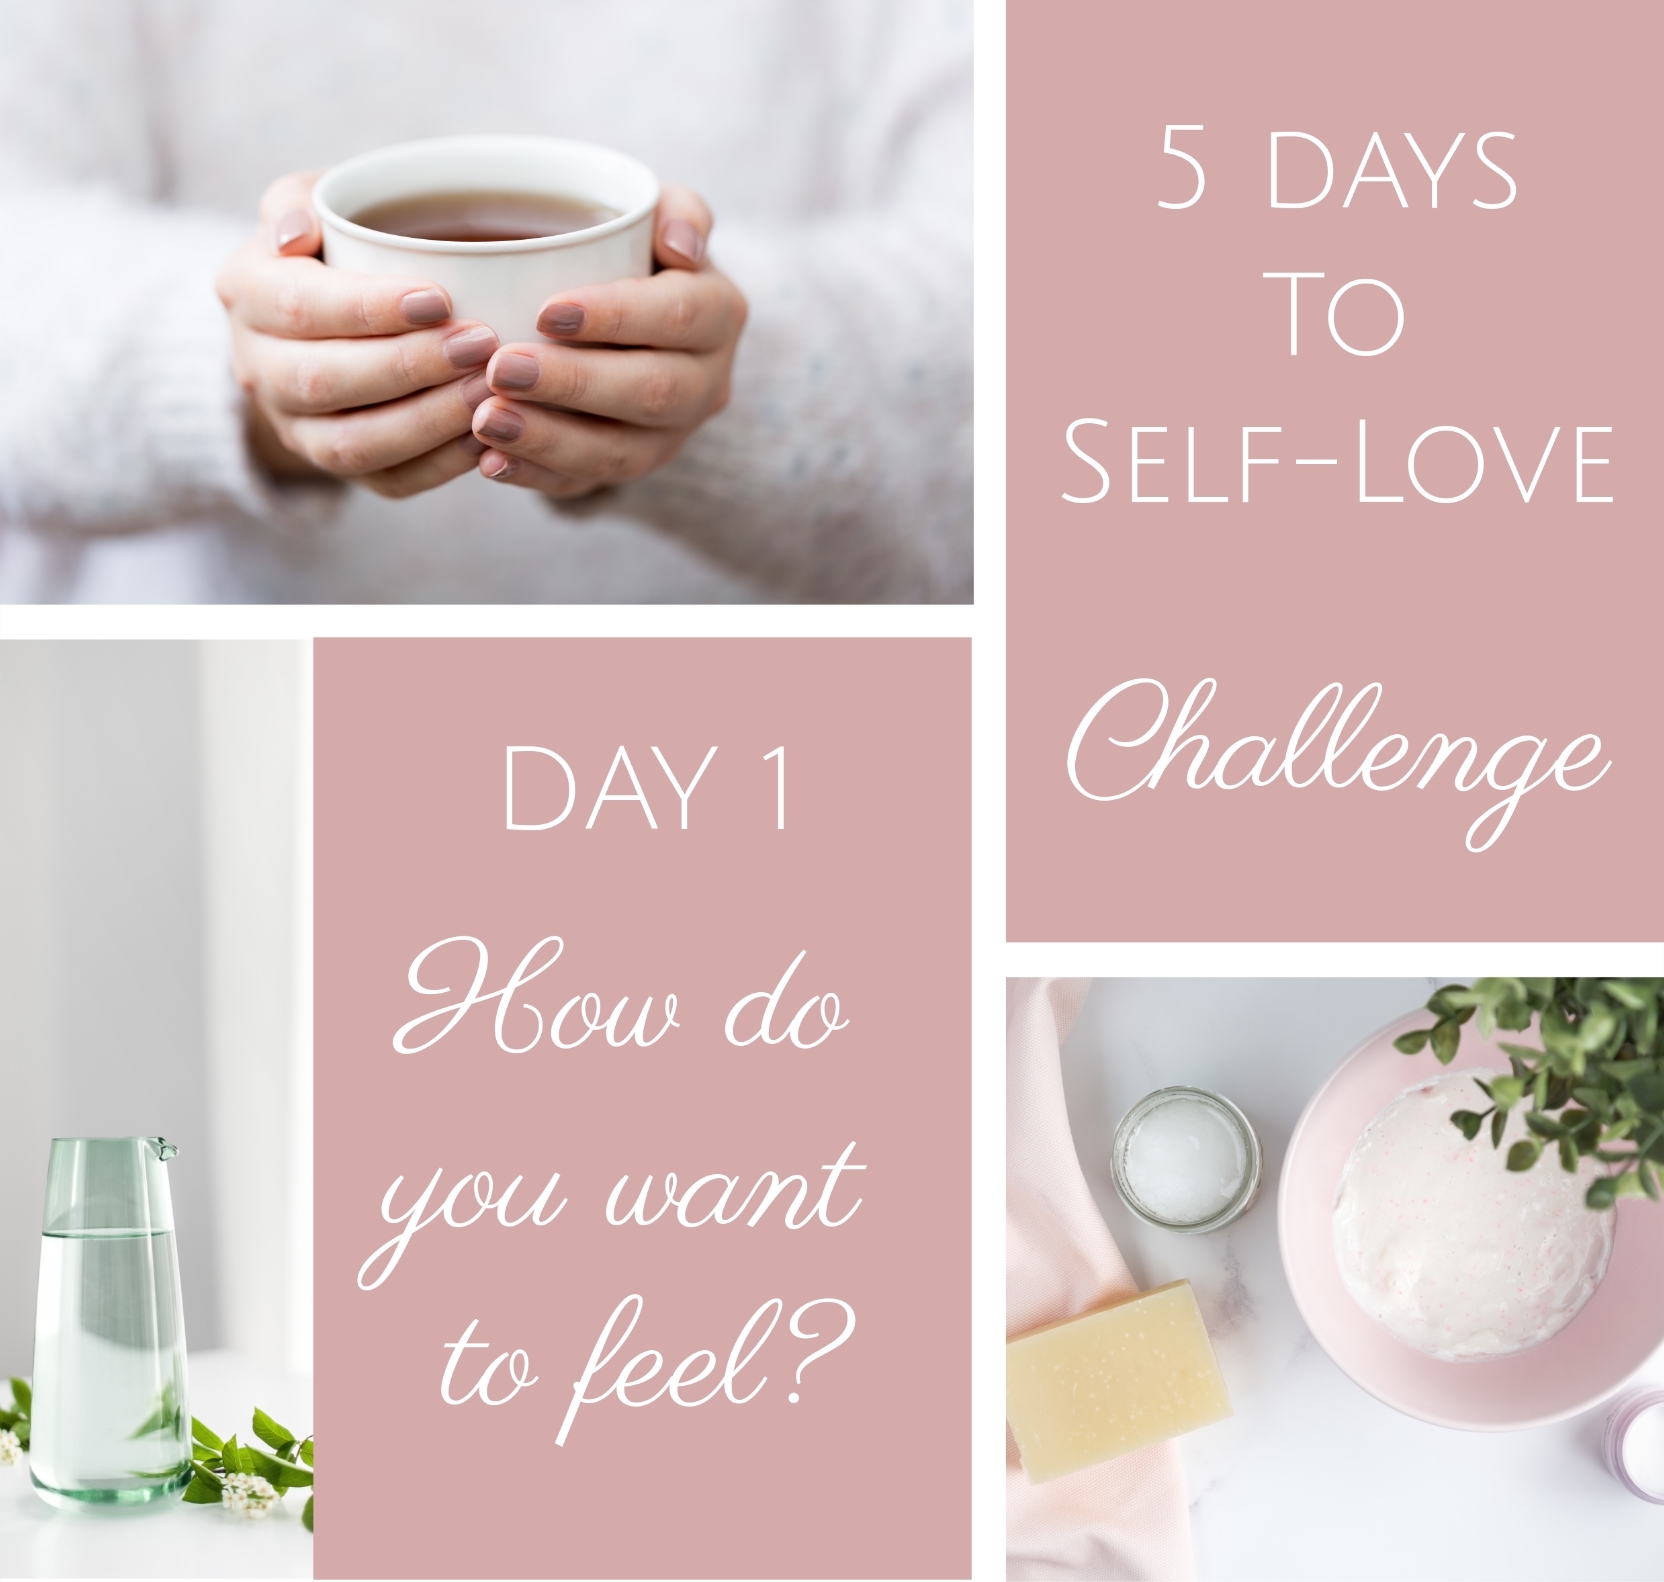 5 days to selflove - feelings